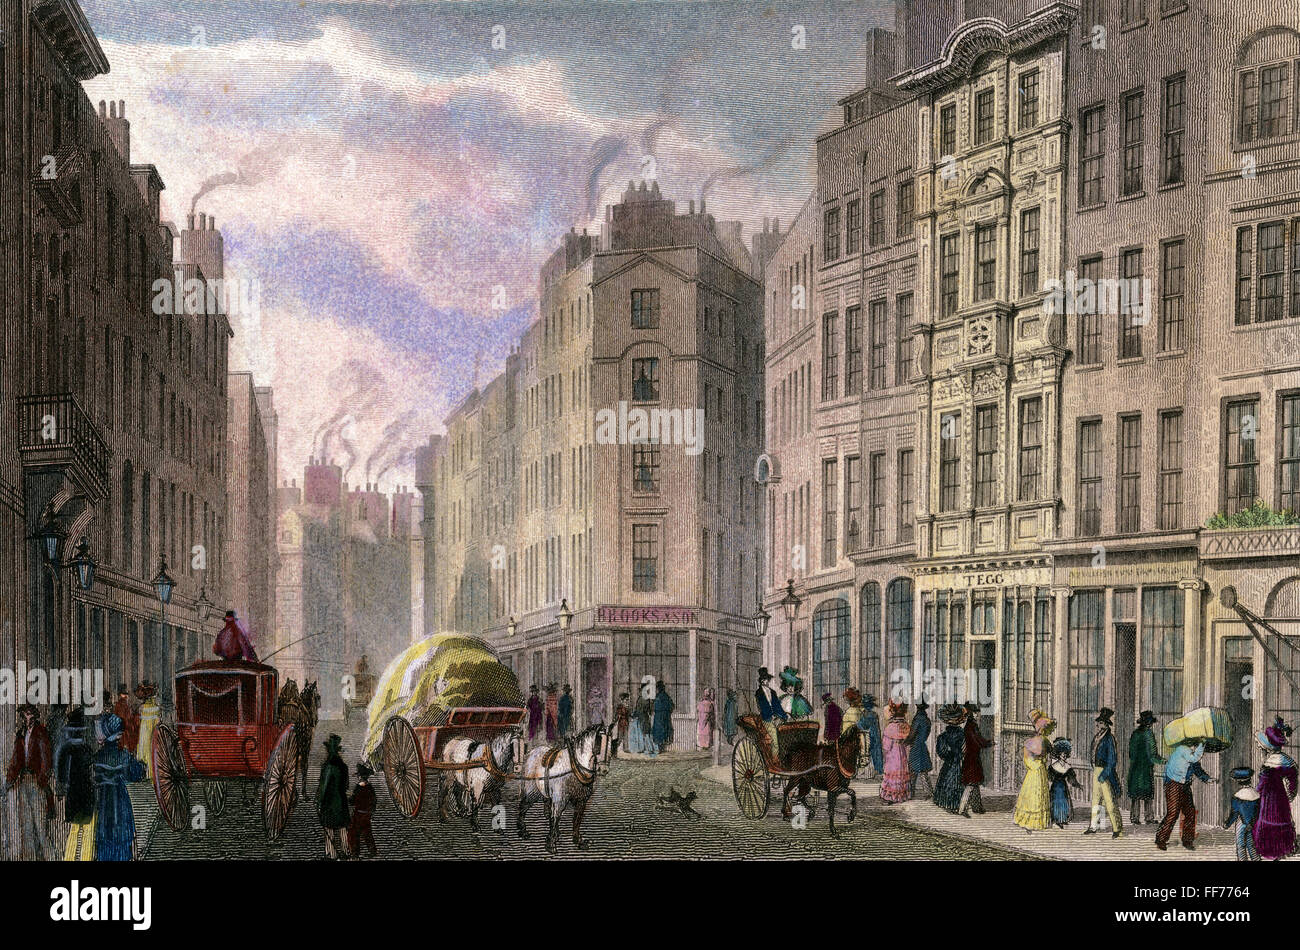 London Street Scene Ncolored Engraving 19th Century Stock Photo Alamy